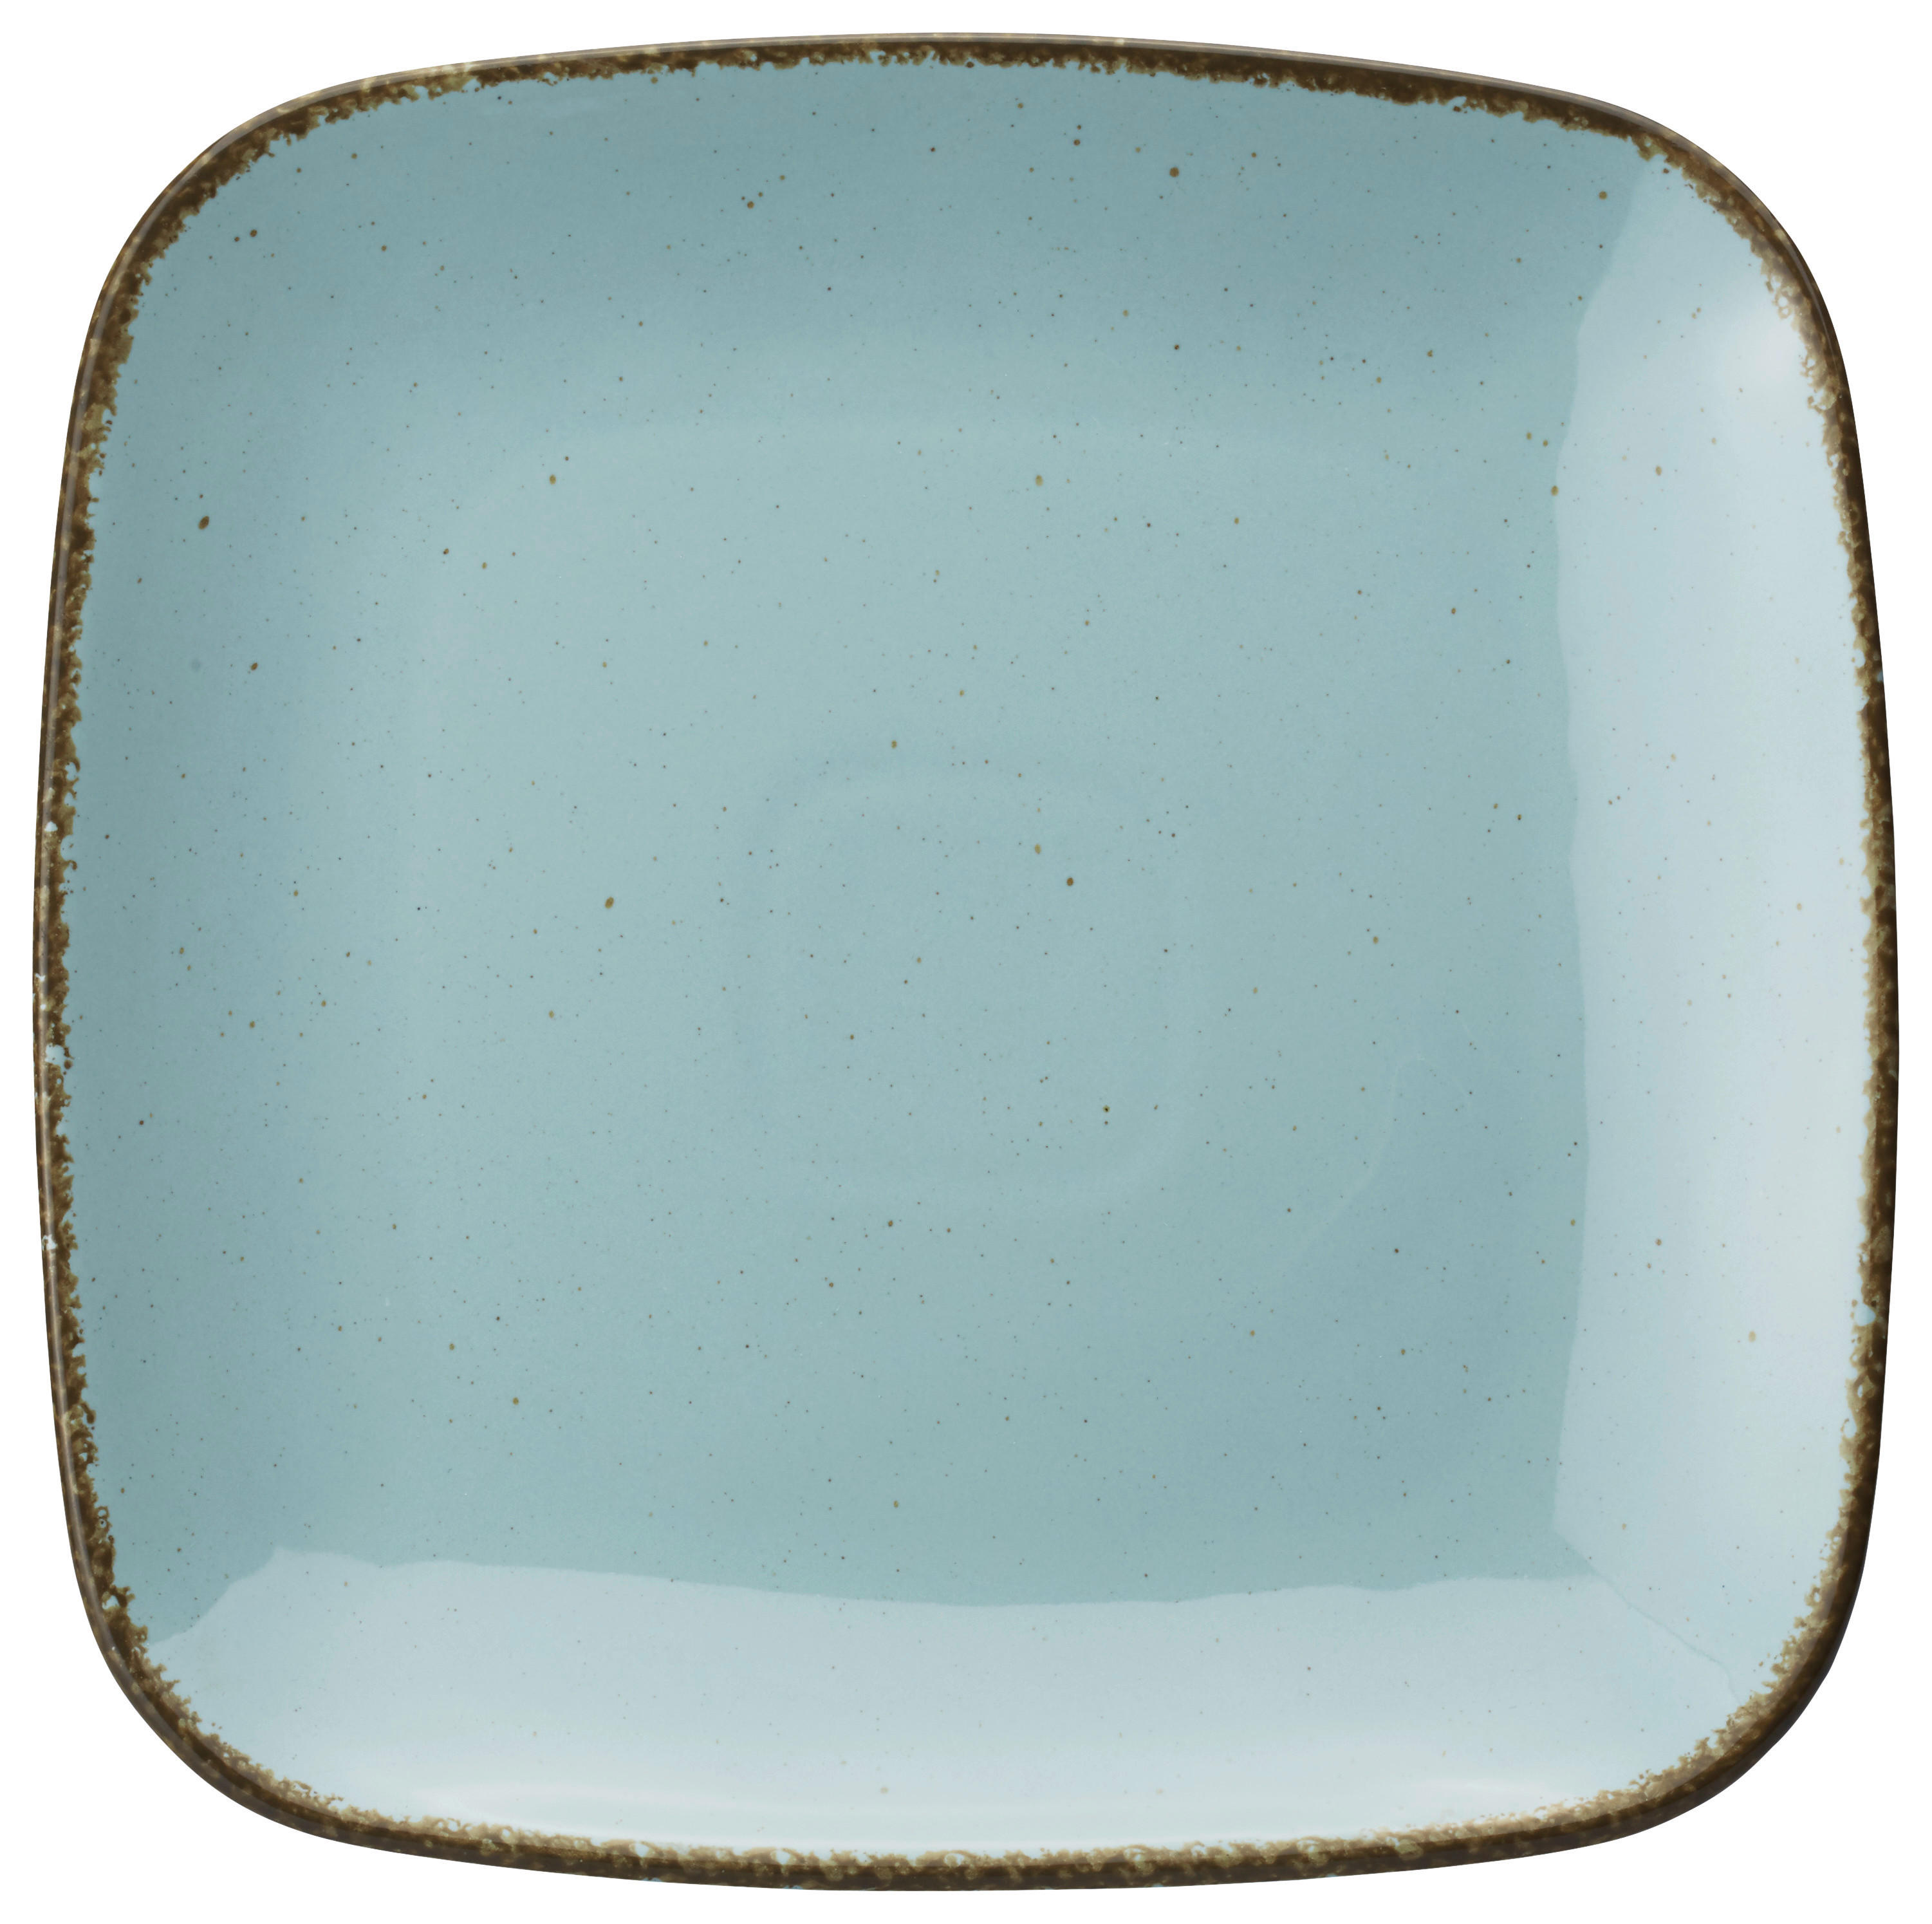 MATTALLRIK    Casa  - ljusblå, Trend, keramik (27/27cm) - Ritzenhoff Breker